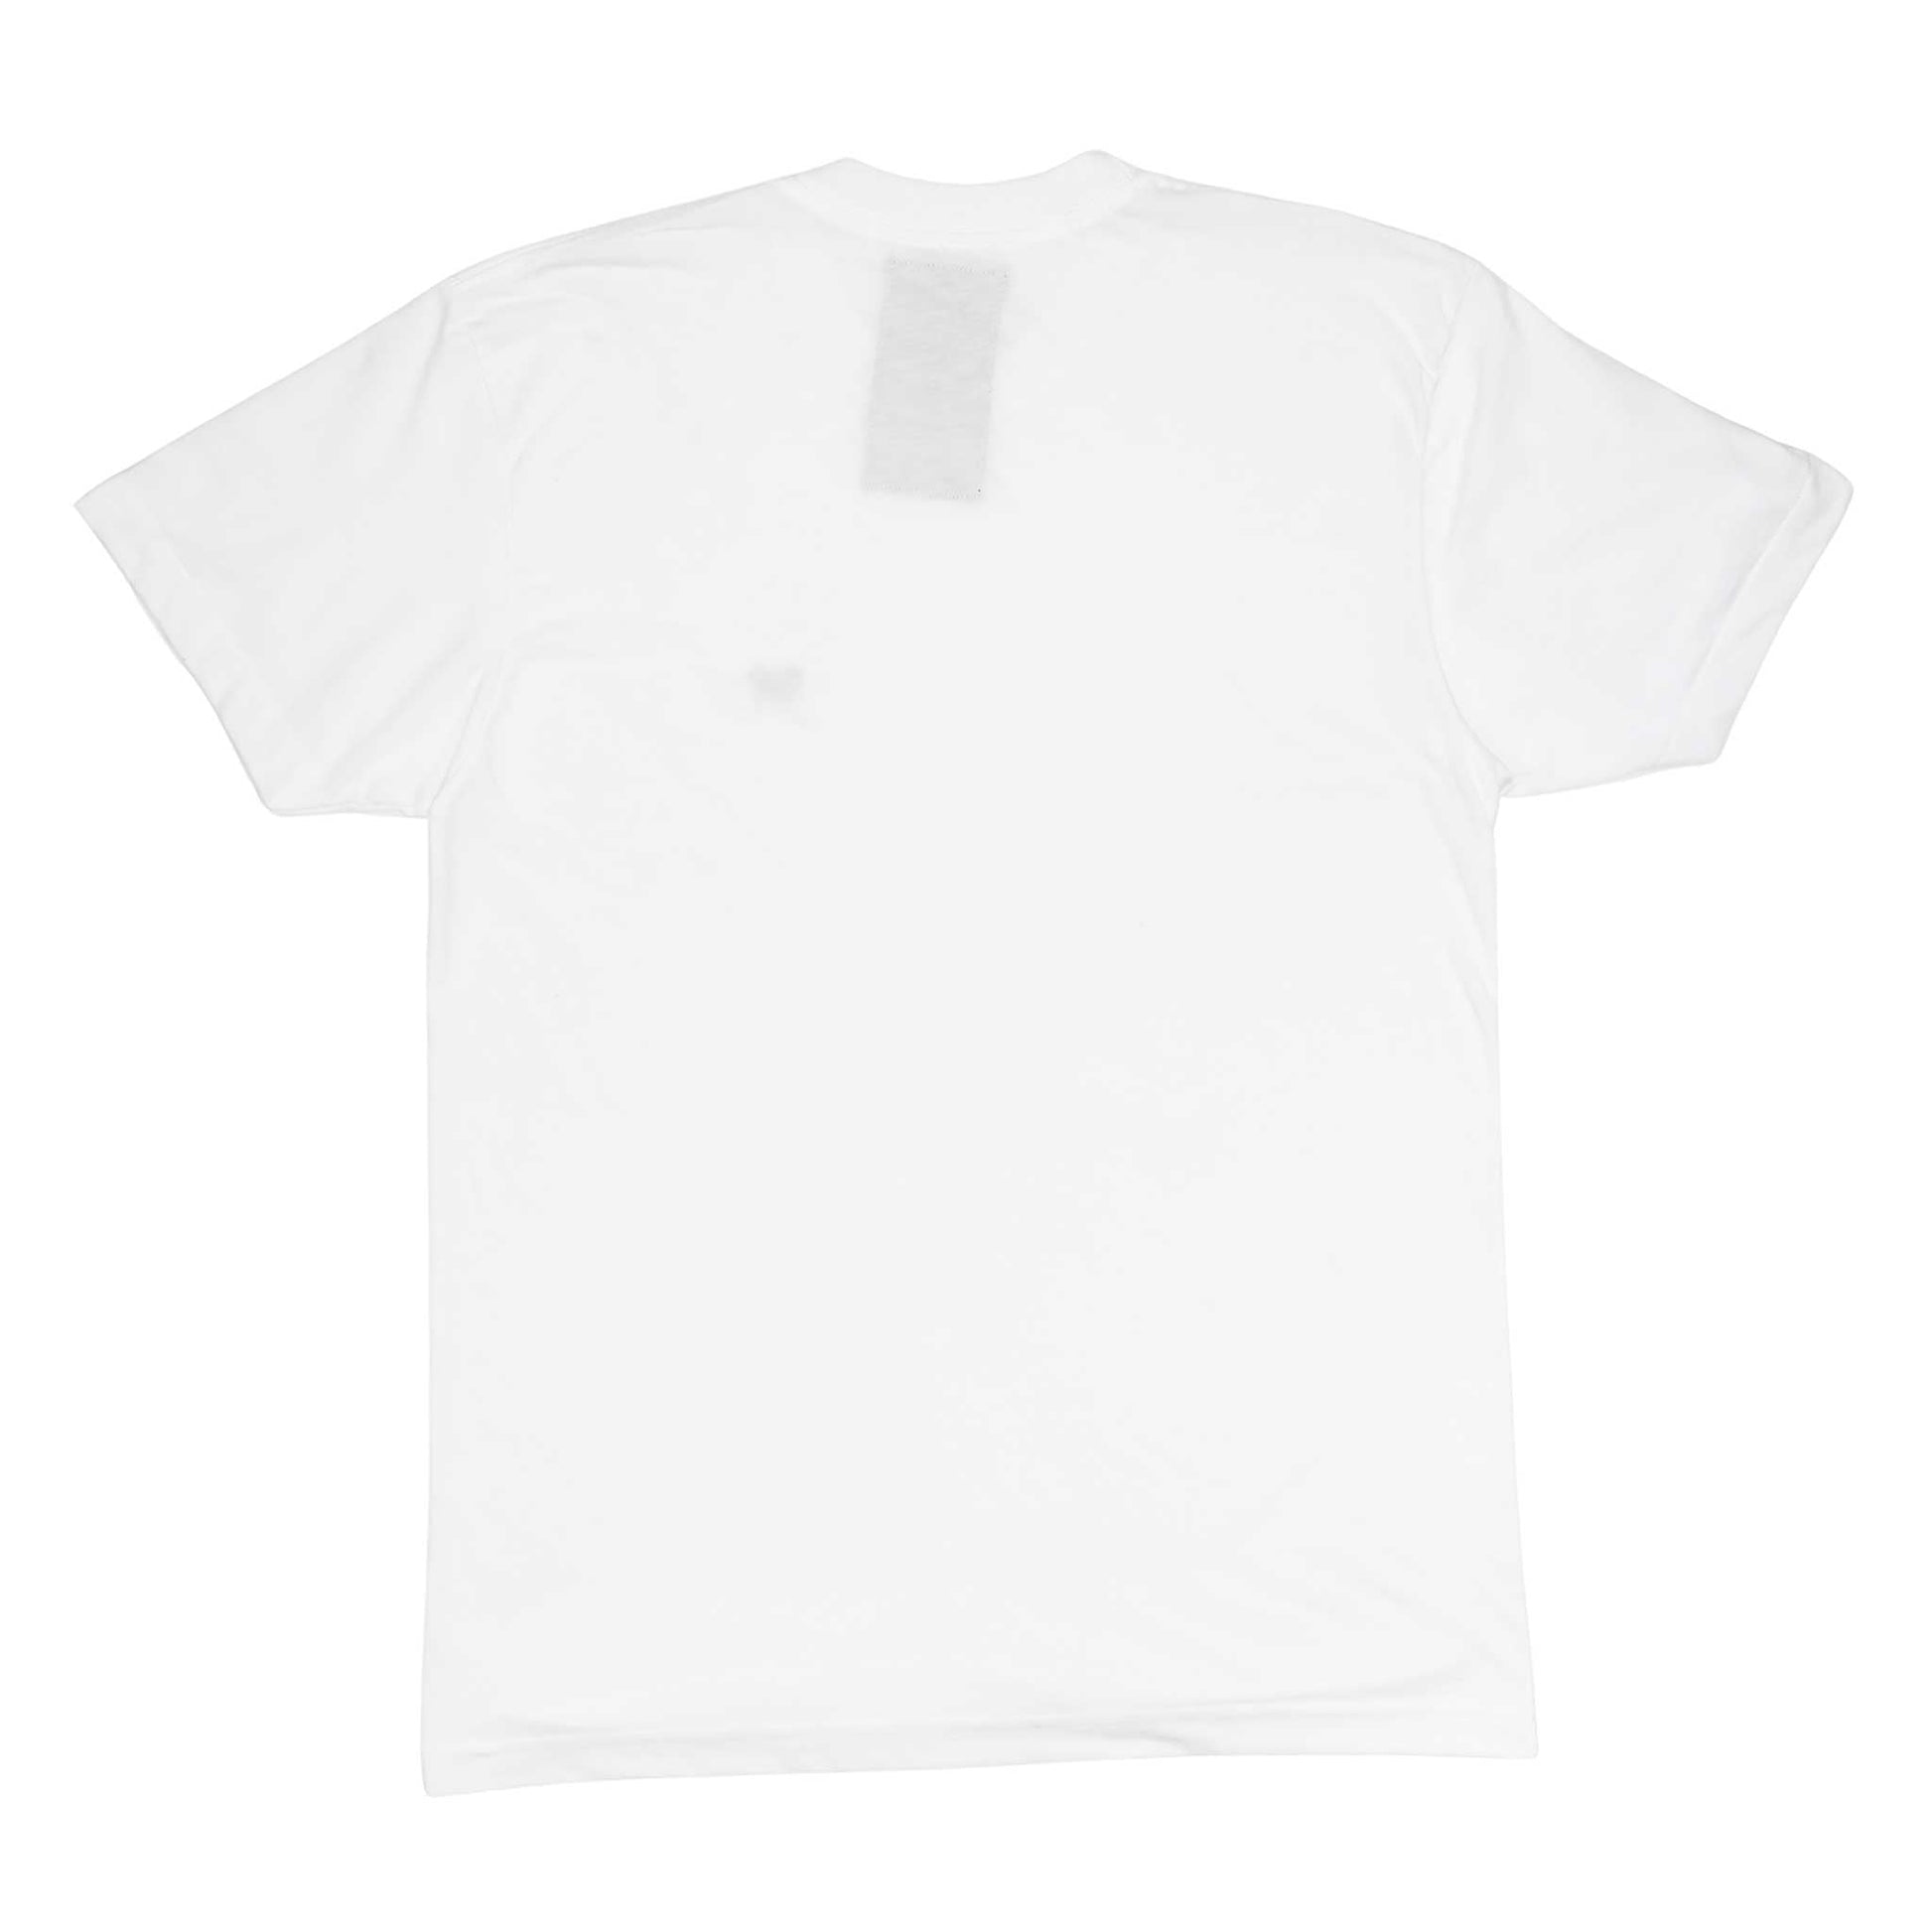 Women's - Lion Embroidered White Crew Neck T-Shirt-Vaughn de Heart